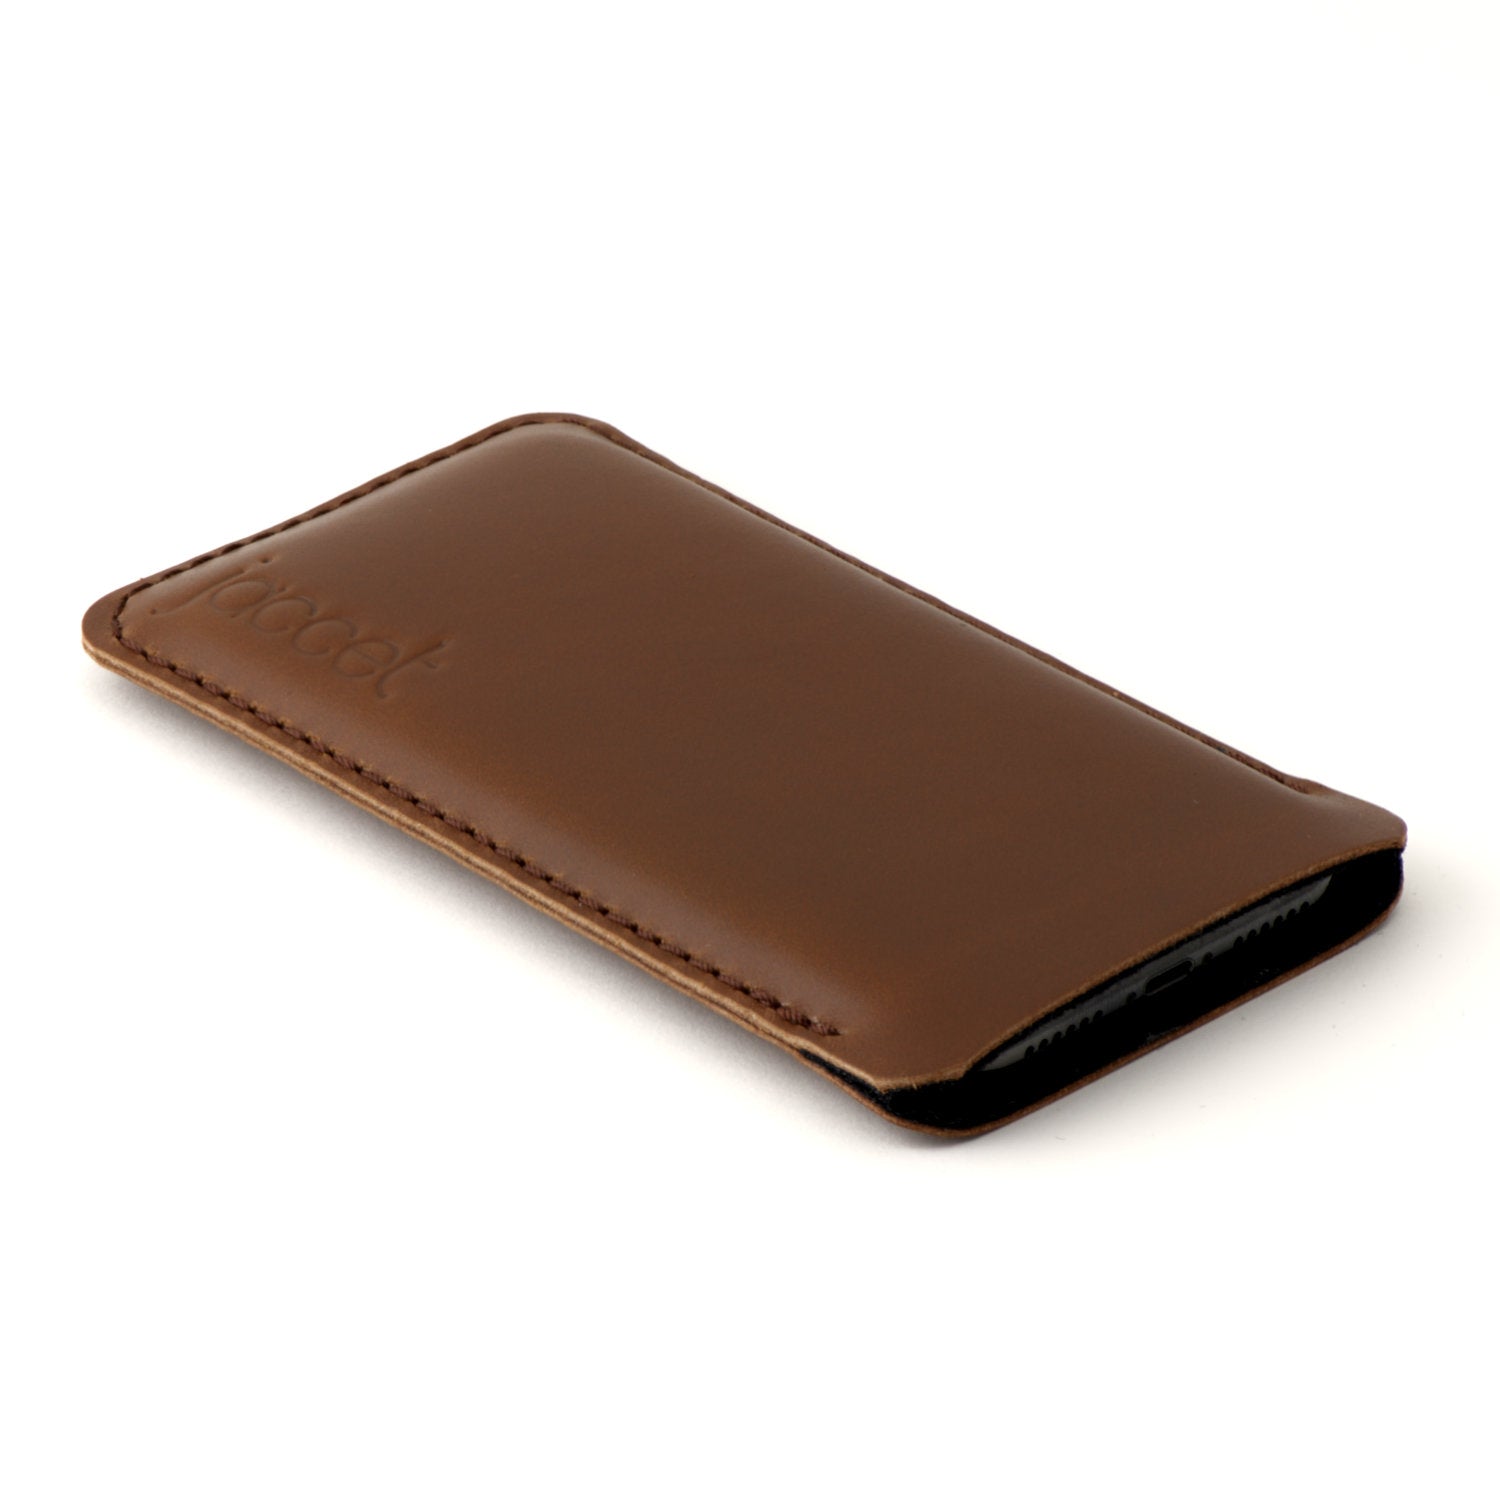 Full-grain leather Google Pixel sleeve - Brown leather with black wolvilt - 100% handmade